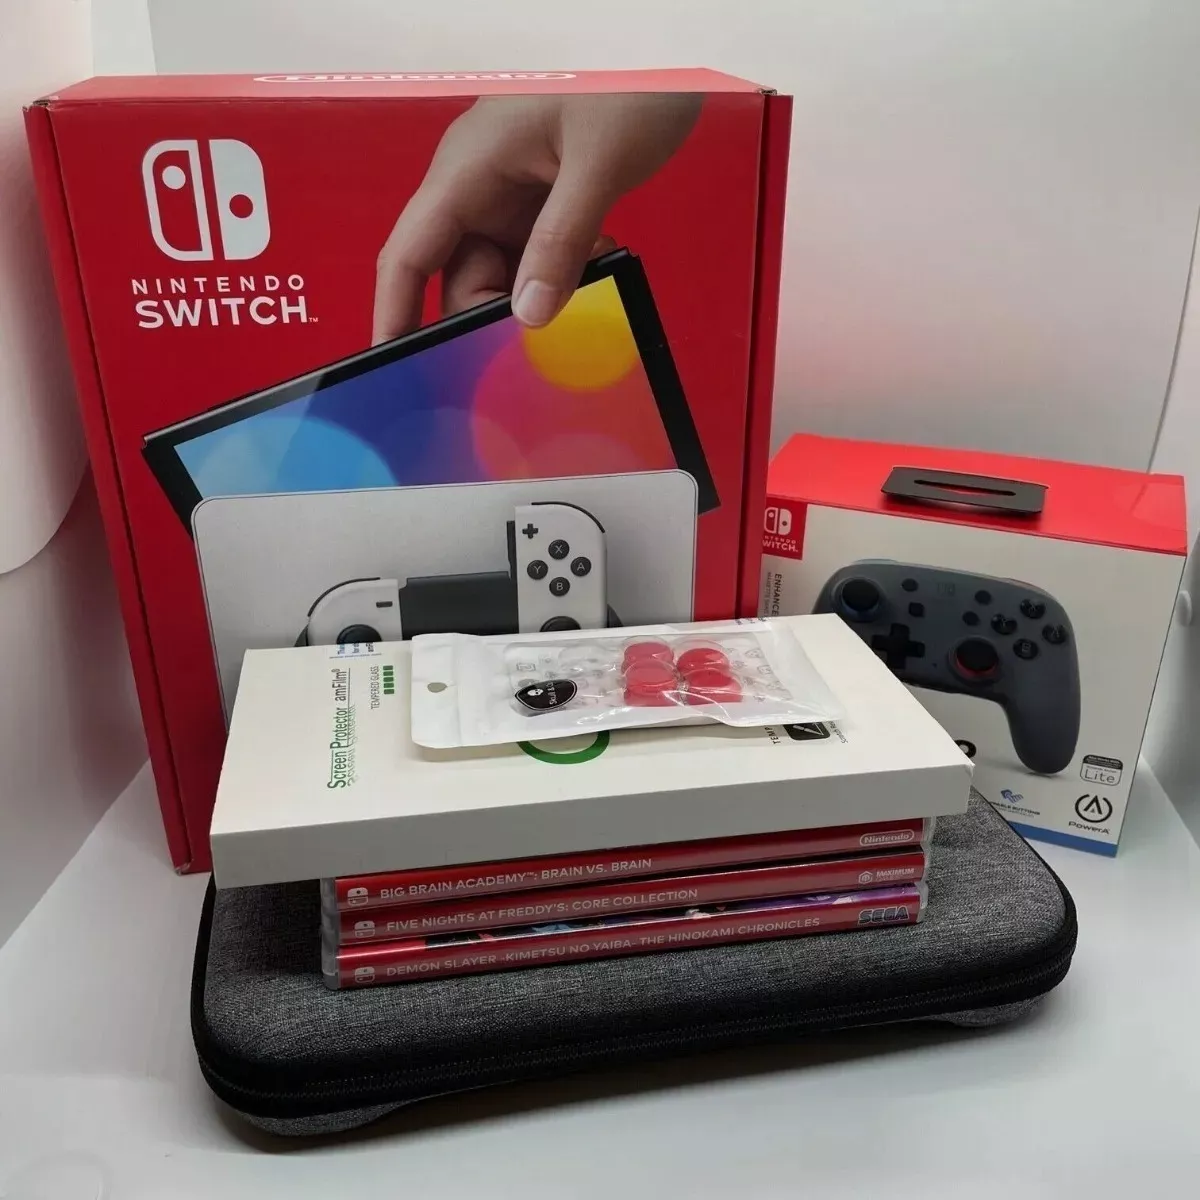 Nintendo Switch Oled Model - 64gb